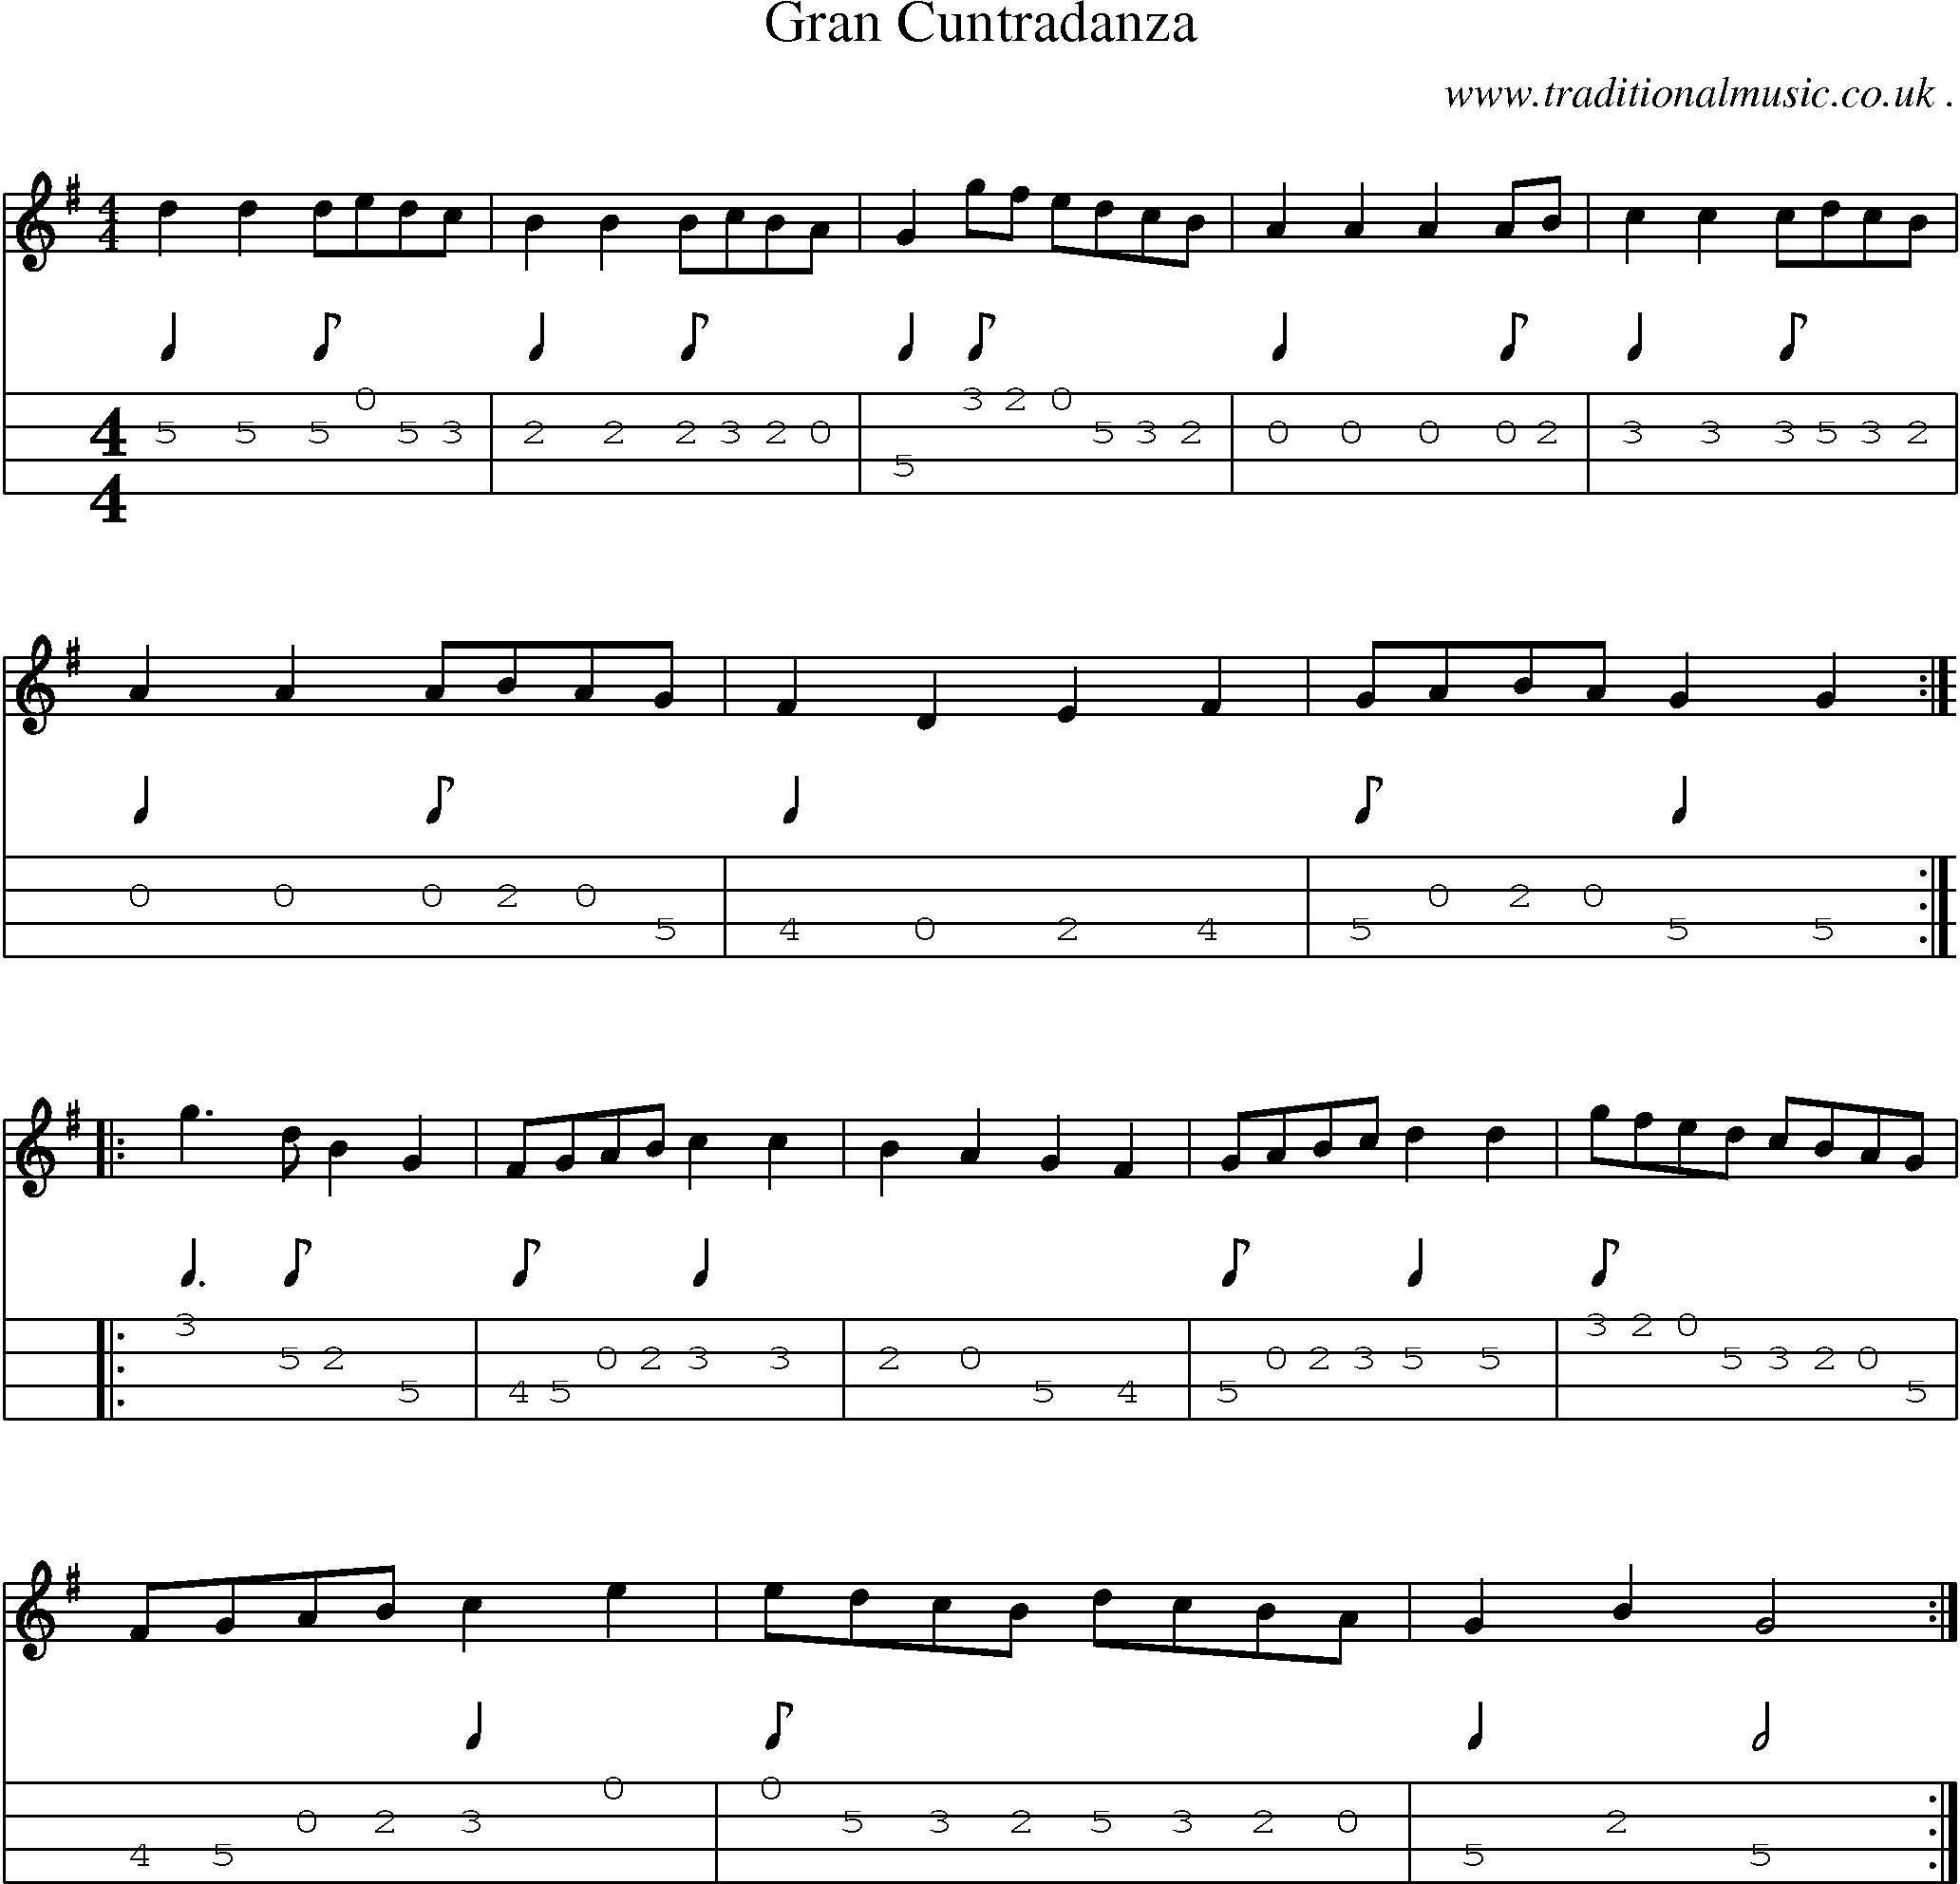 Sheet-Music and Mandolin Tabs for Gran Cuntradanza